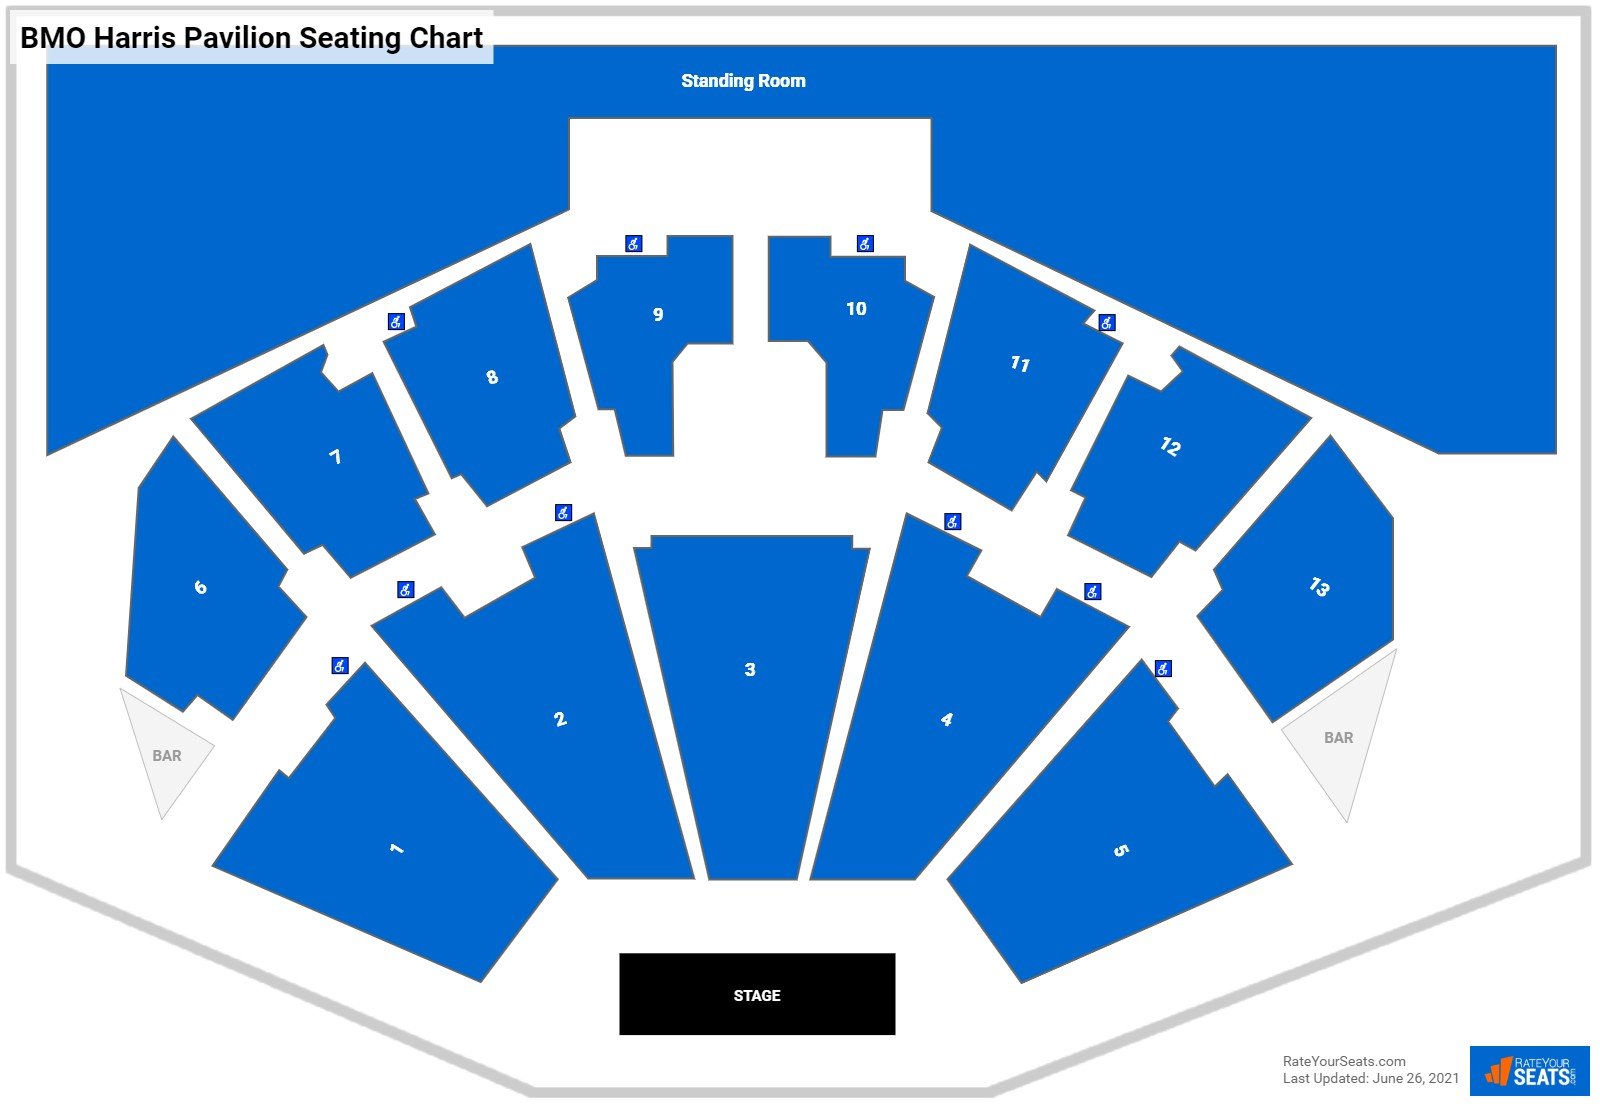 BMO Harris Pavilion Concert Seating Chart